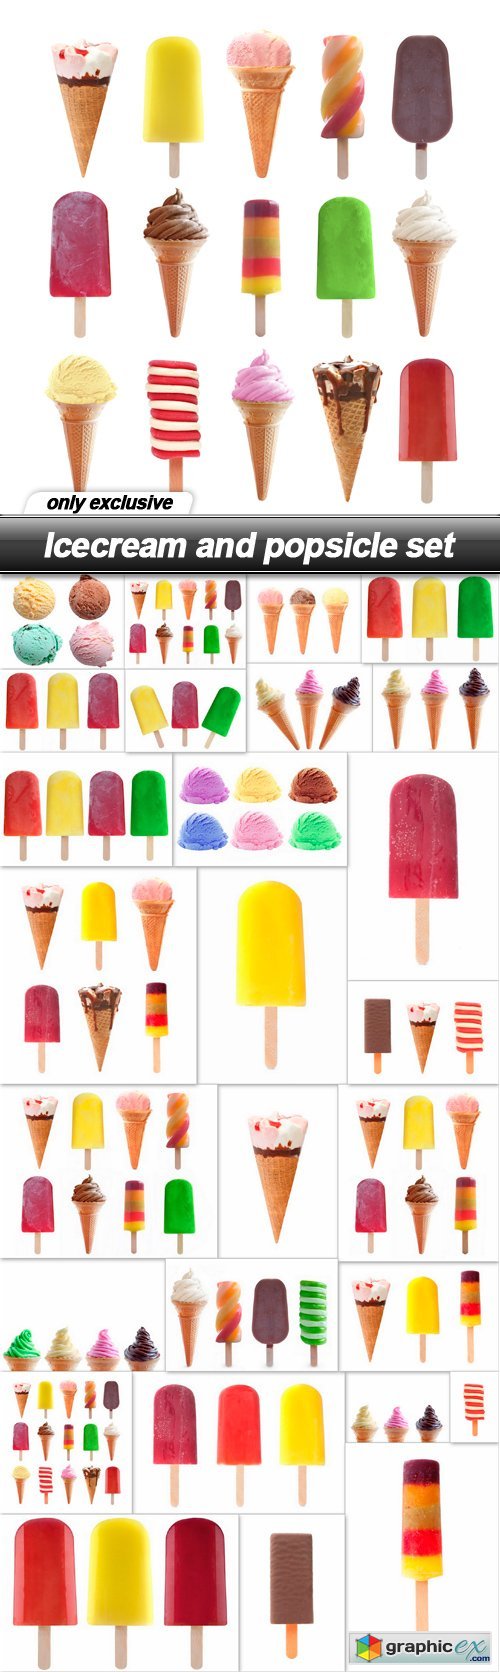 Icecream and popsicle set - 27 UHQ JPEG